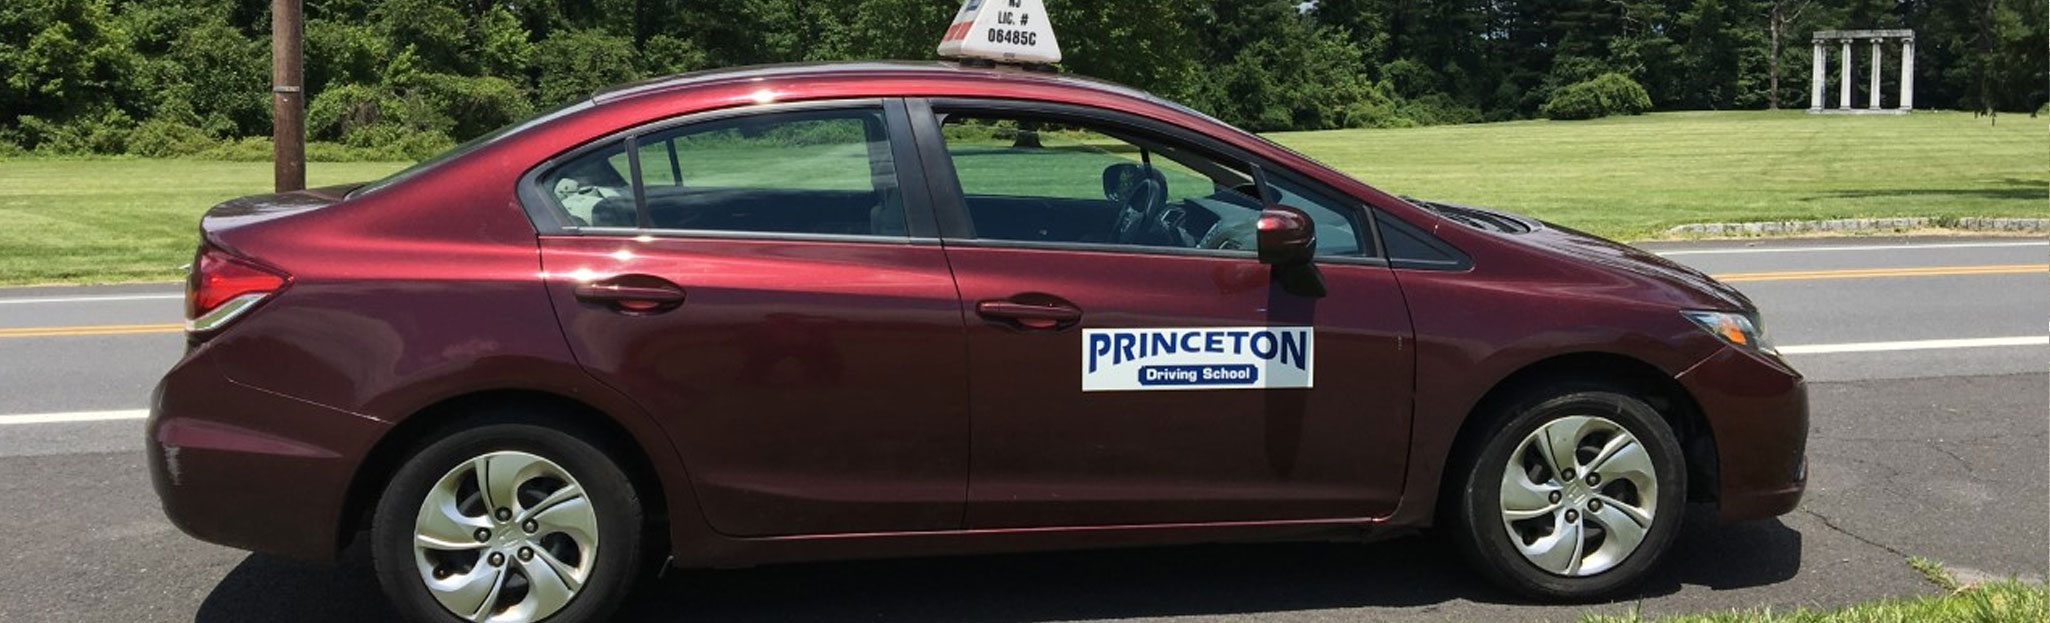 Princeton Driving School Adults Programs